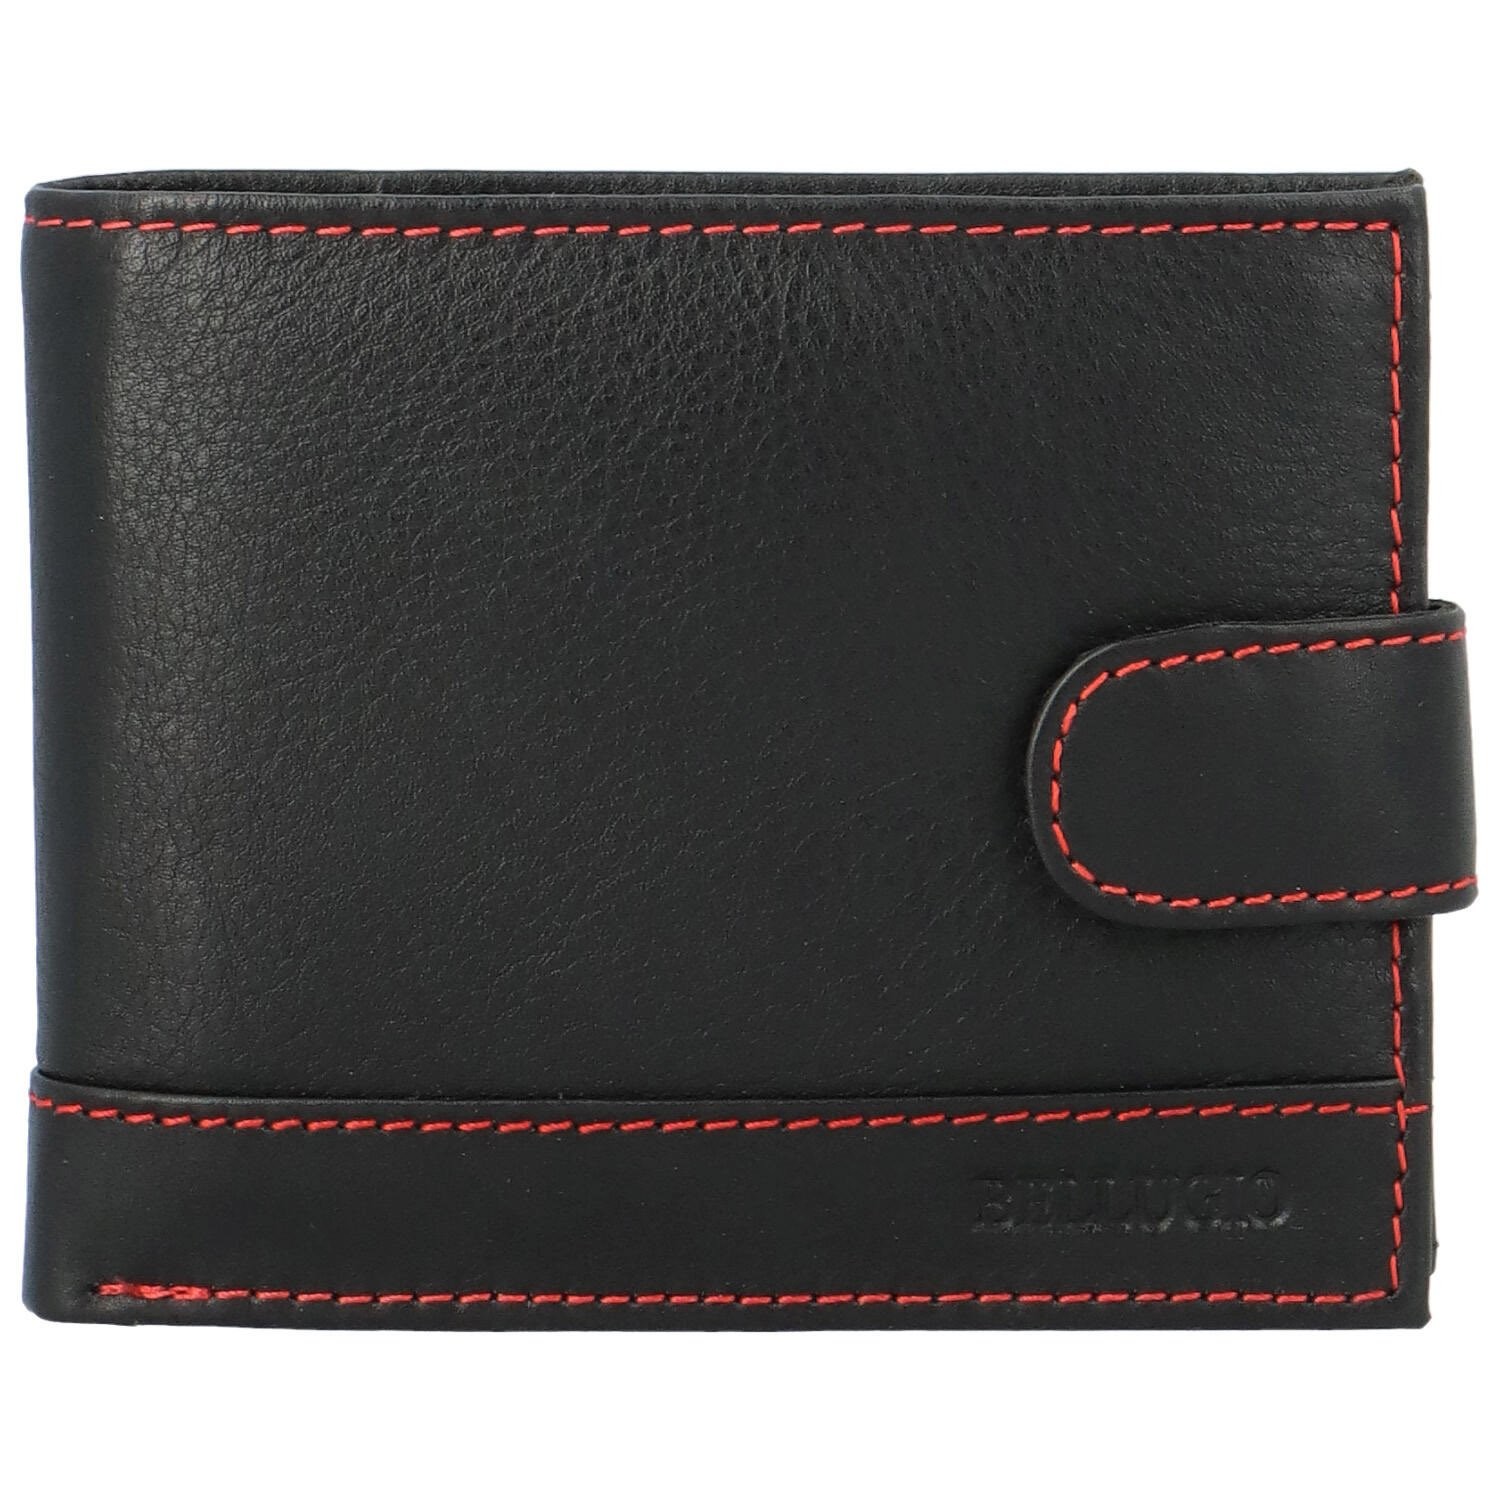 Pánská kožená peněženka černá - Bellugio Carloson černá